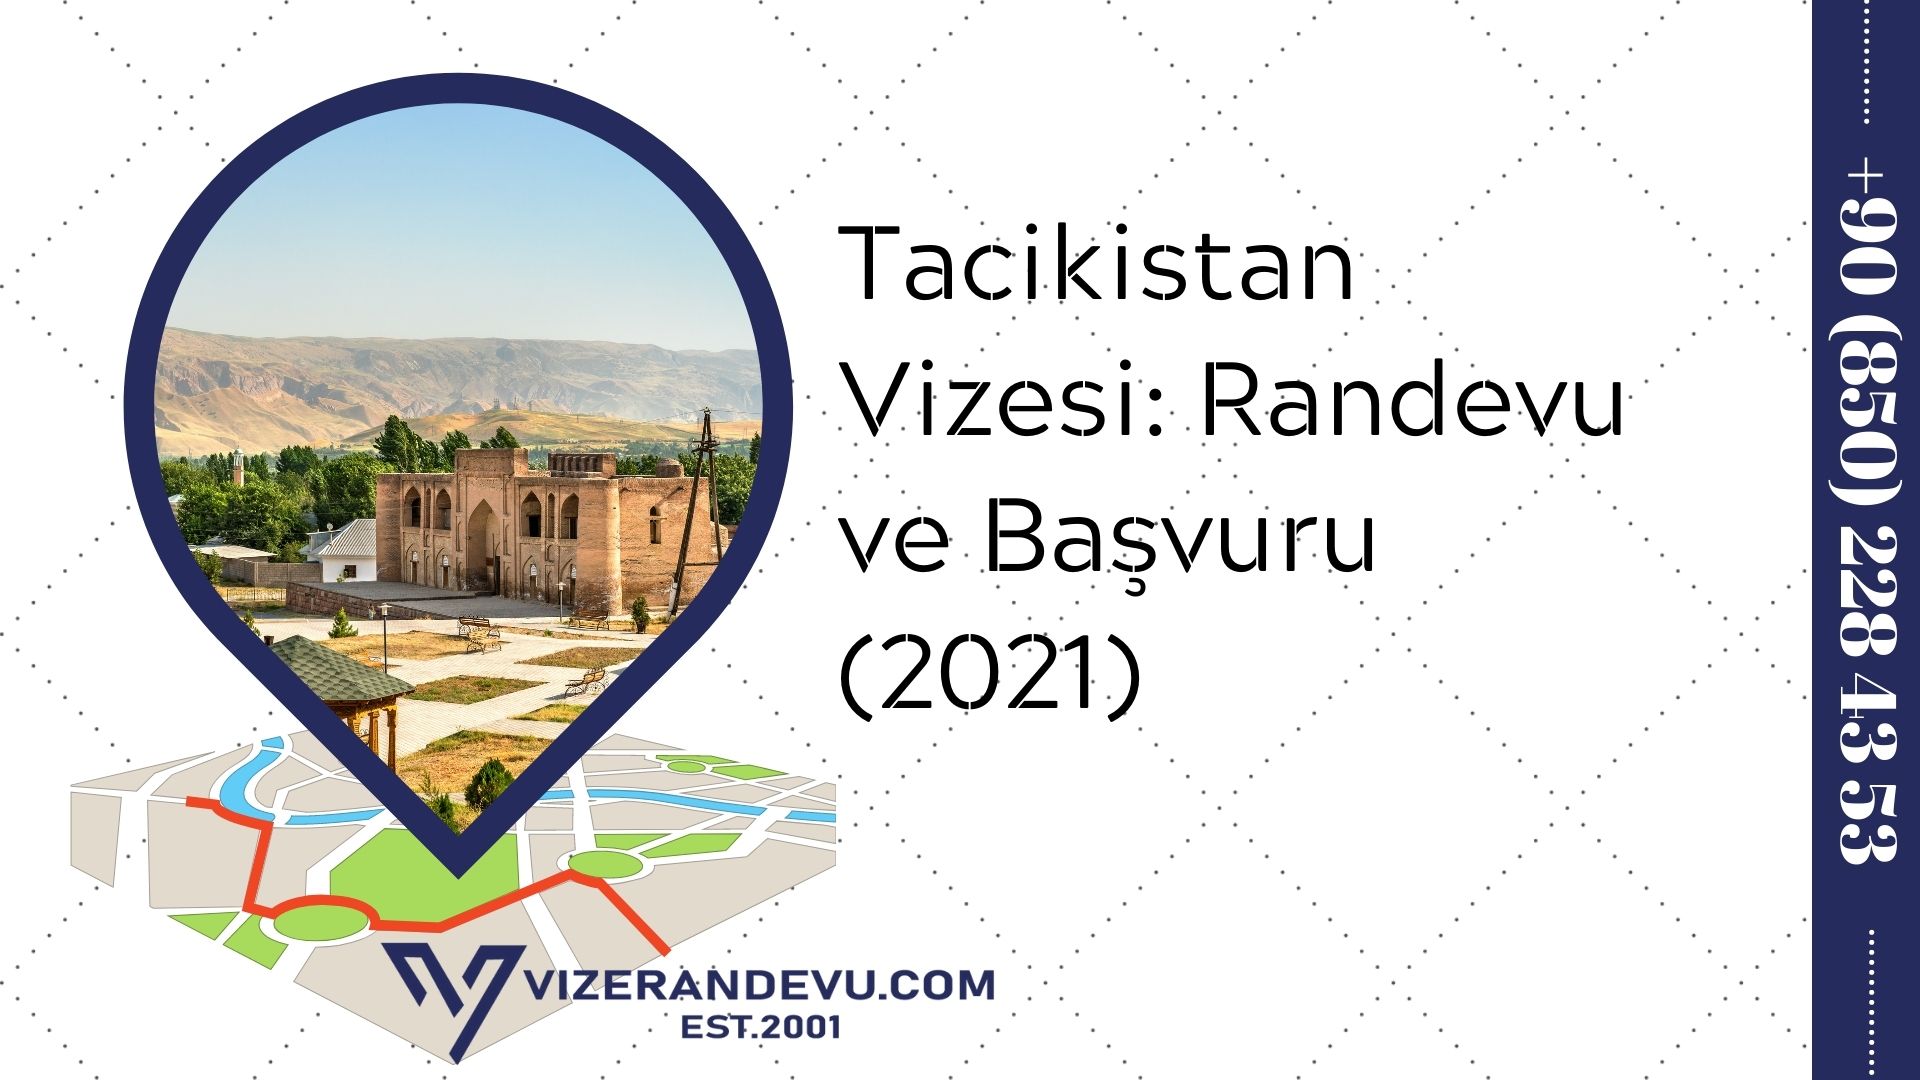 Tacikistan Vizesi: Randevu ve Başvuru (2021)